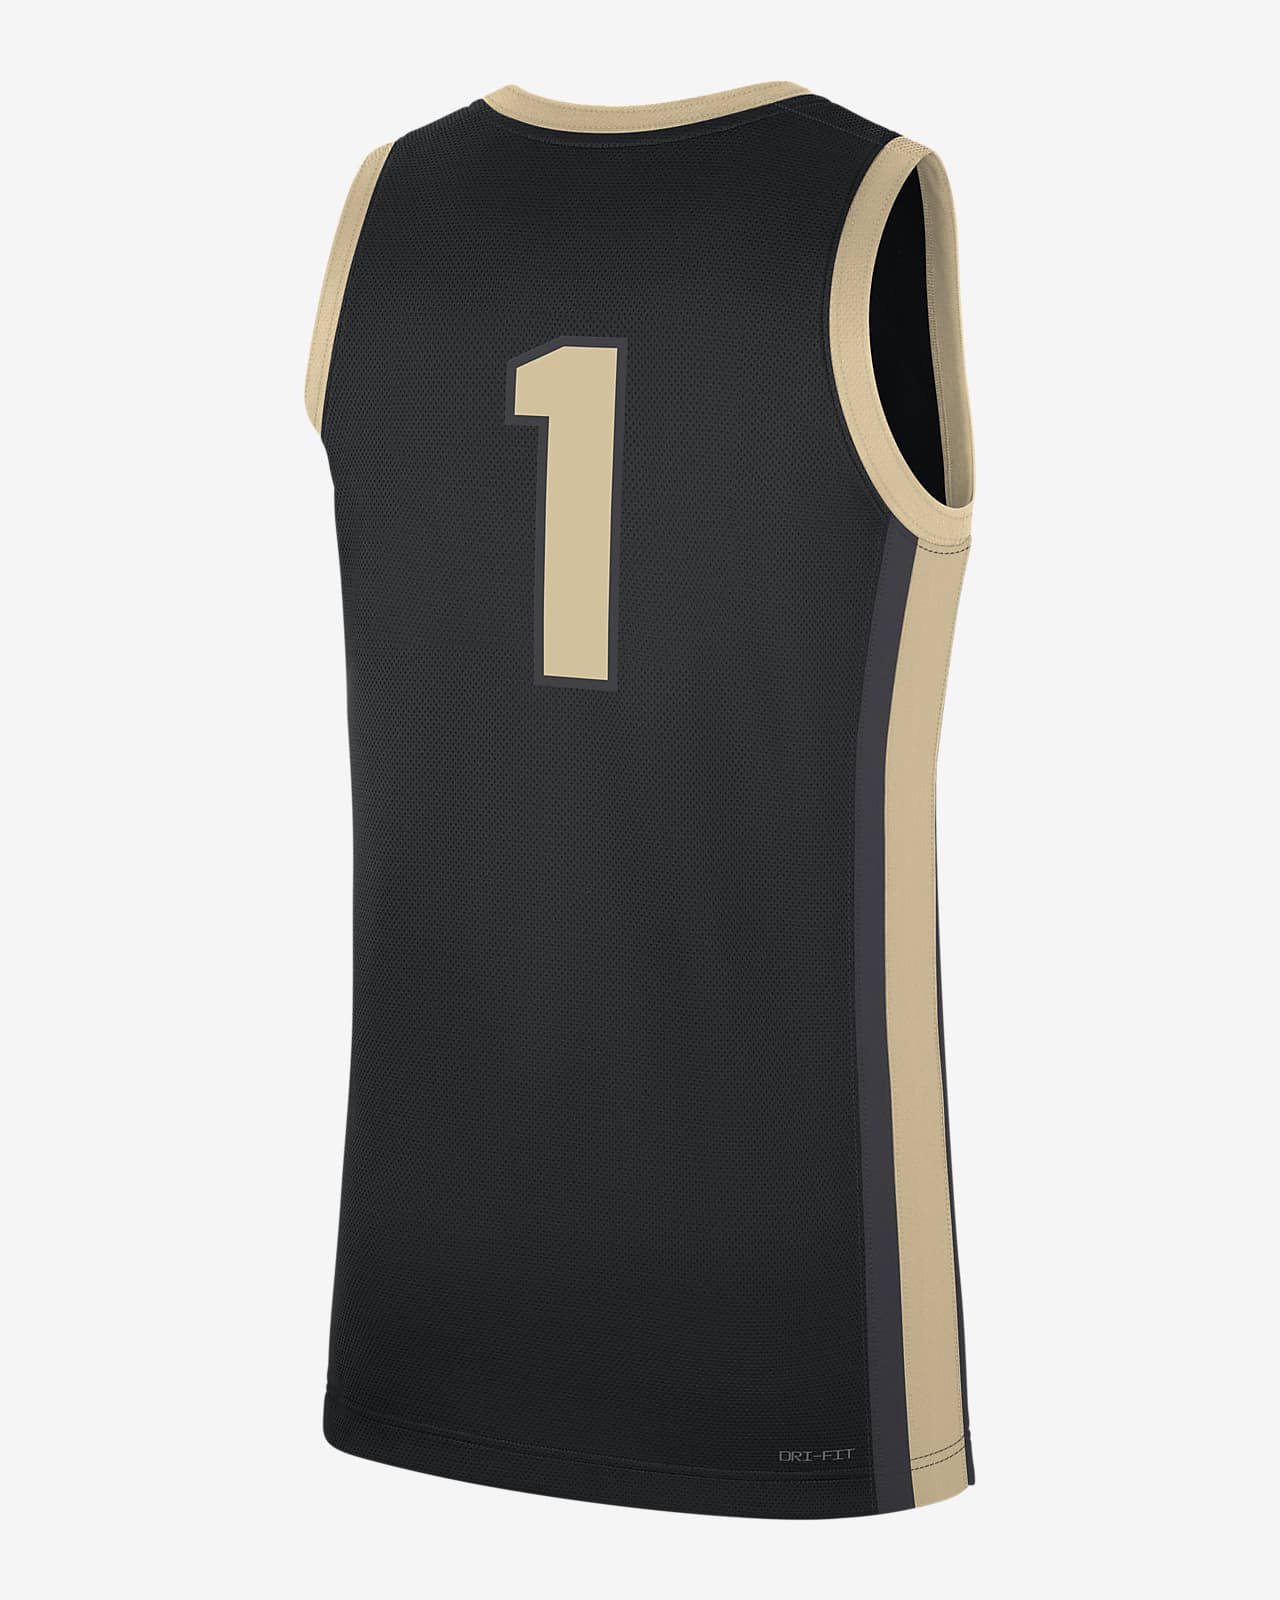 basketball jersey black design